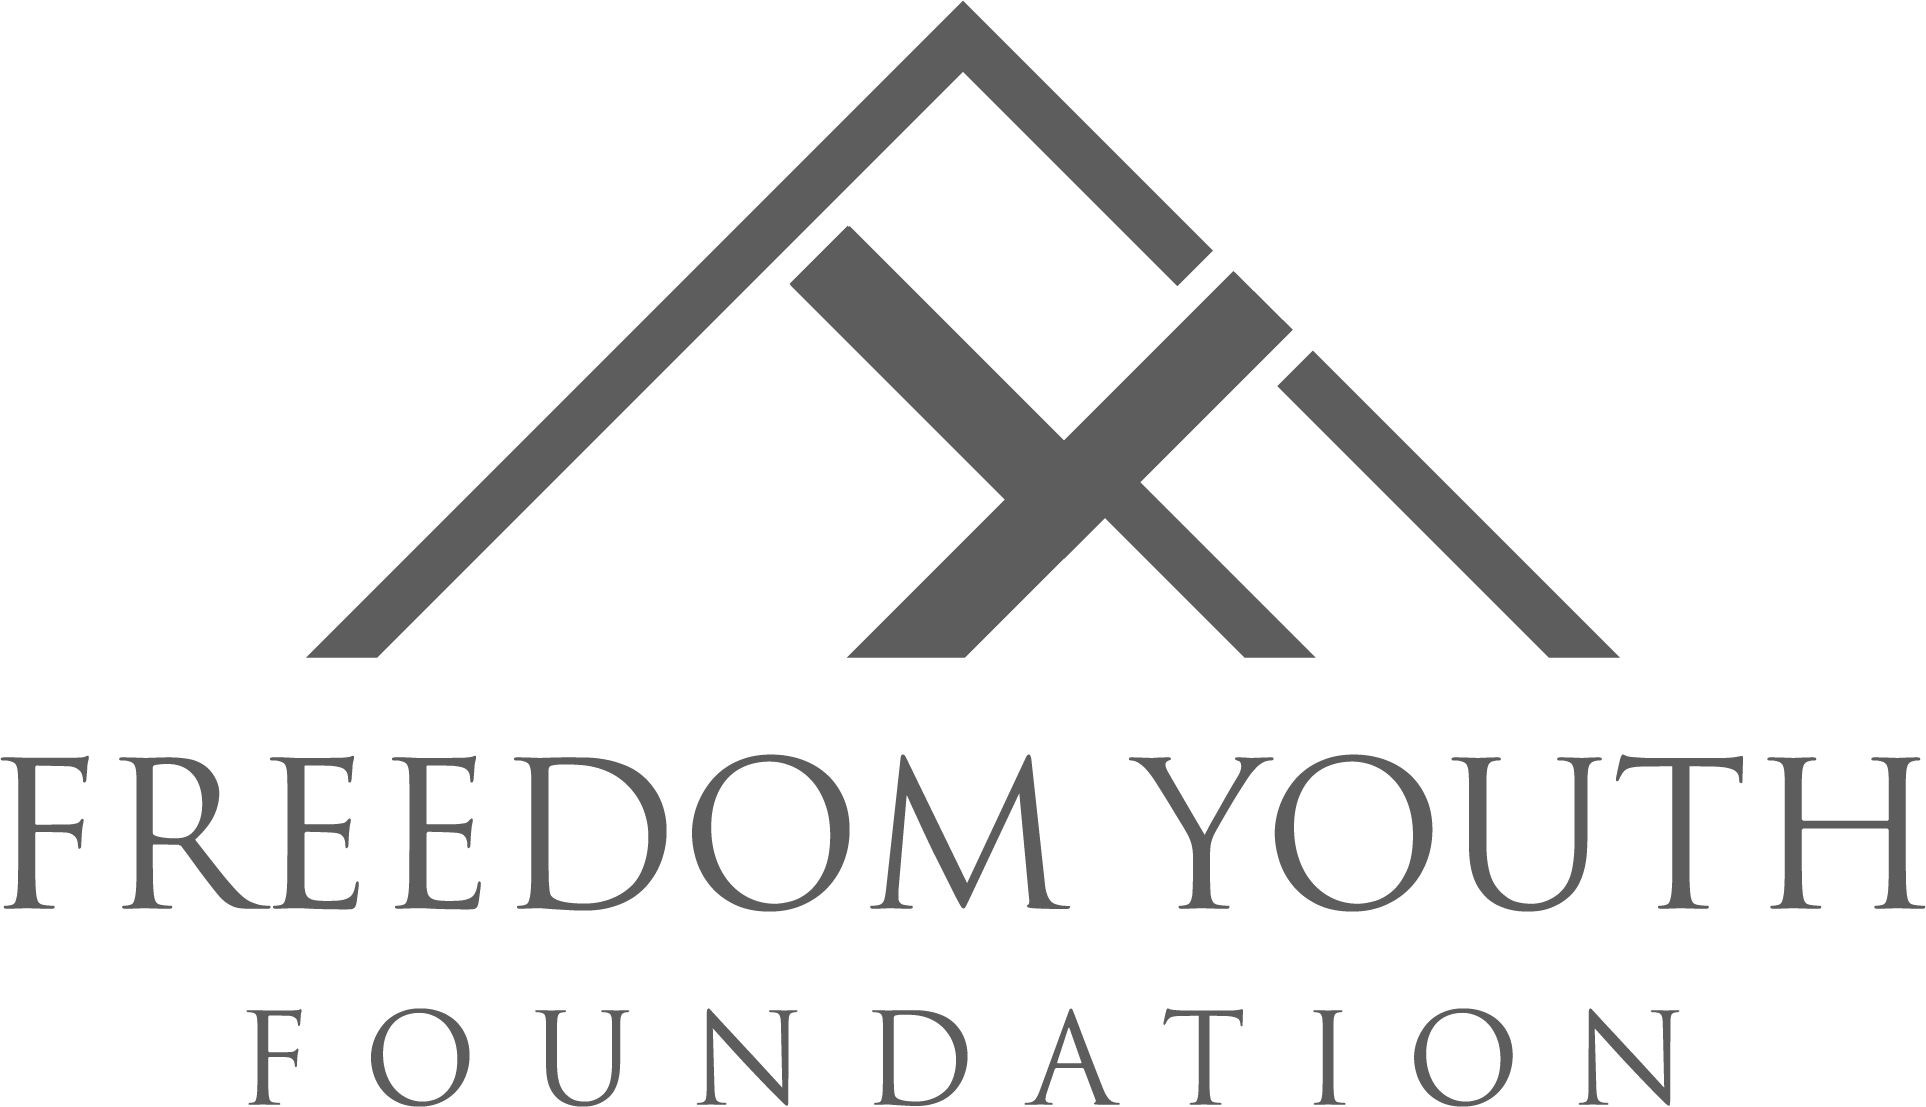 Freedom Youth Foundation